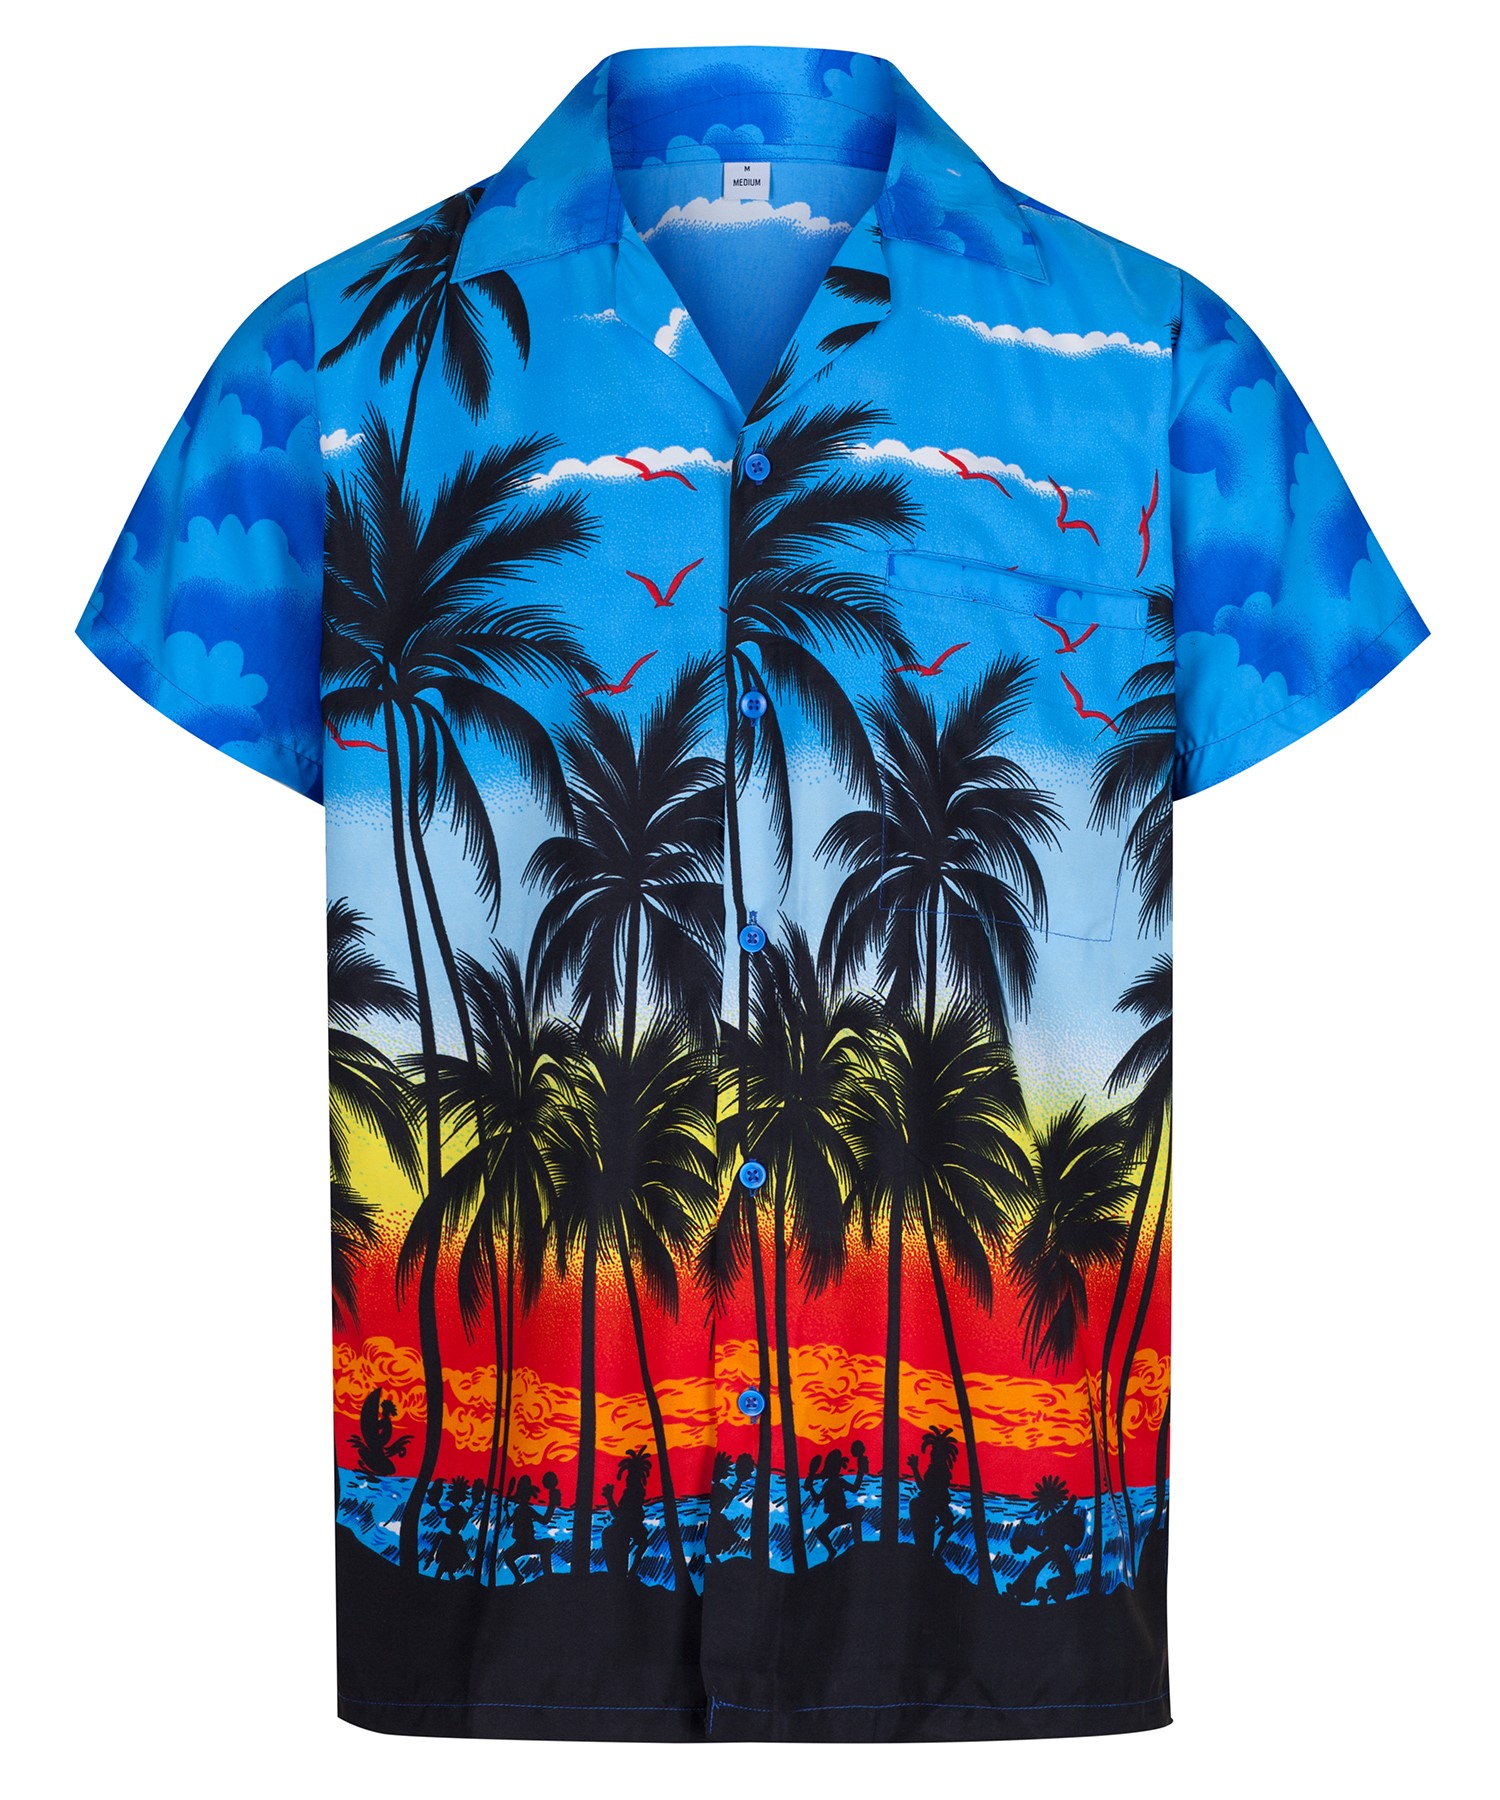 Men's Hawaiian shirt stag beach Hawaii summer holiday aloha party fancy dress